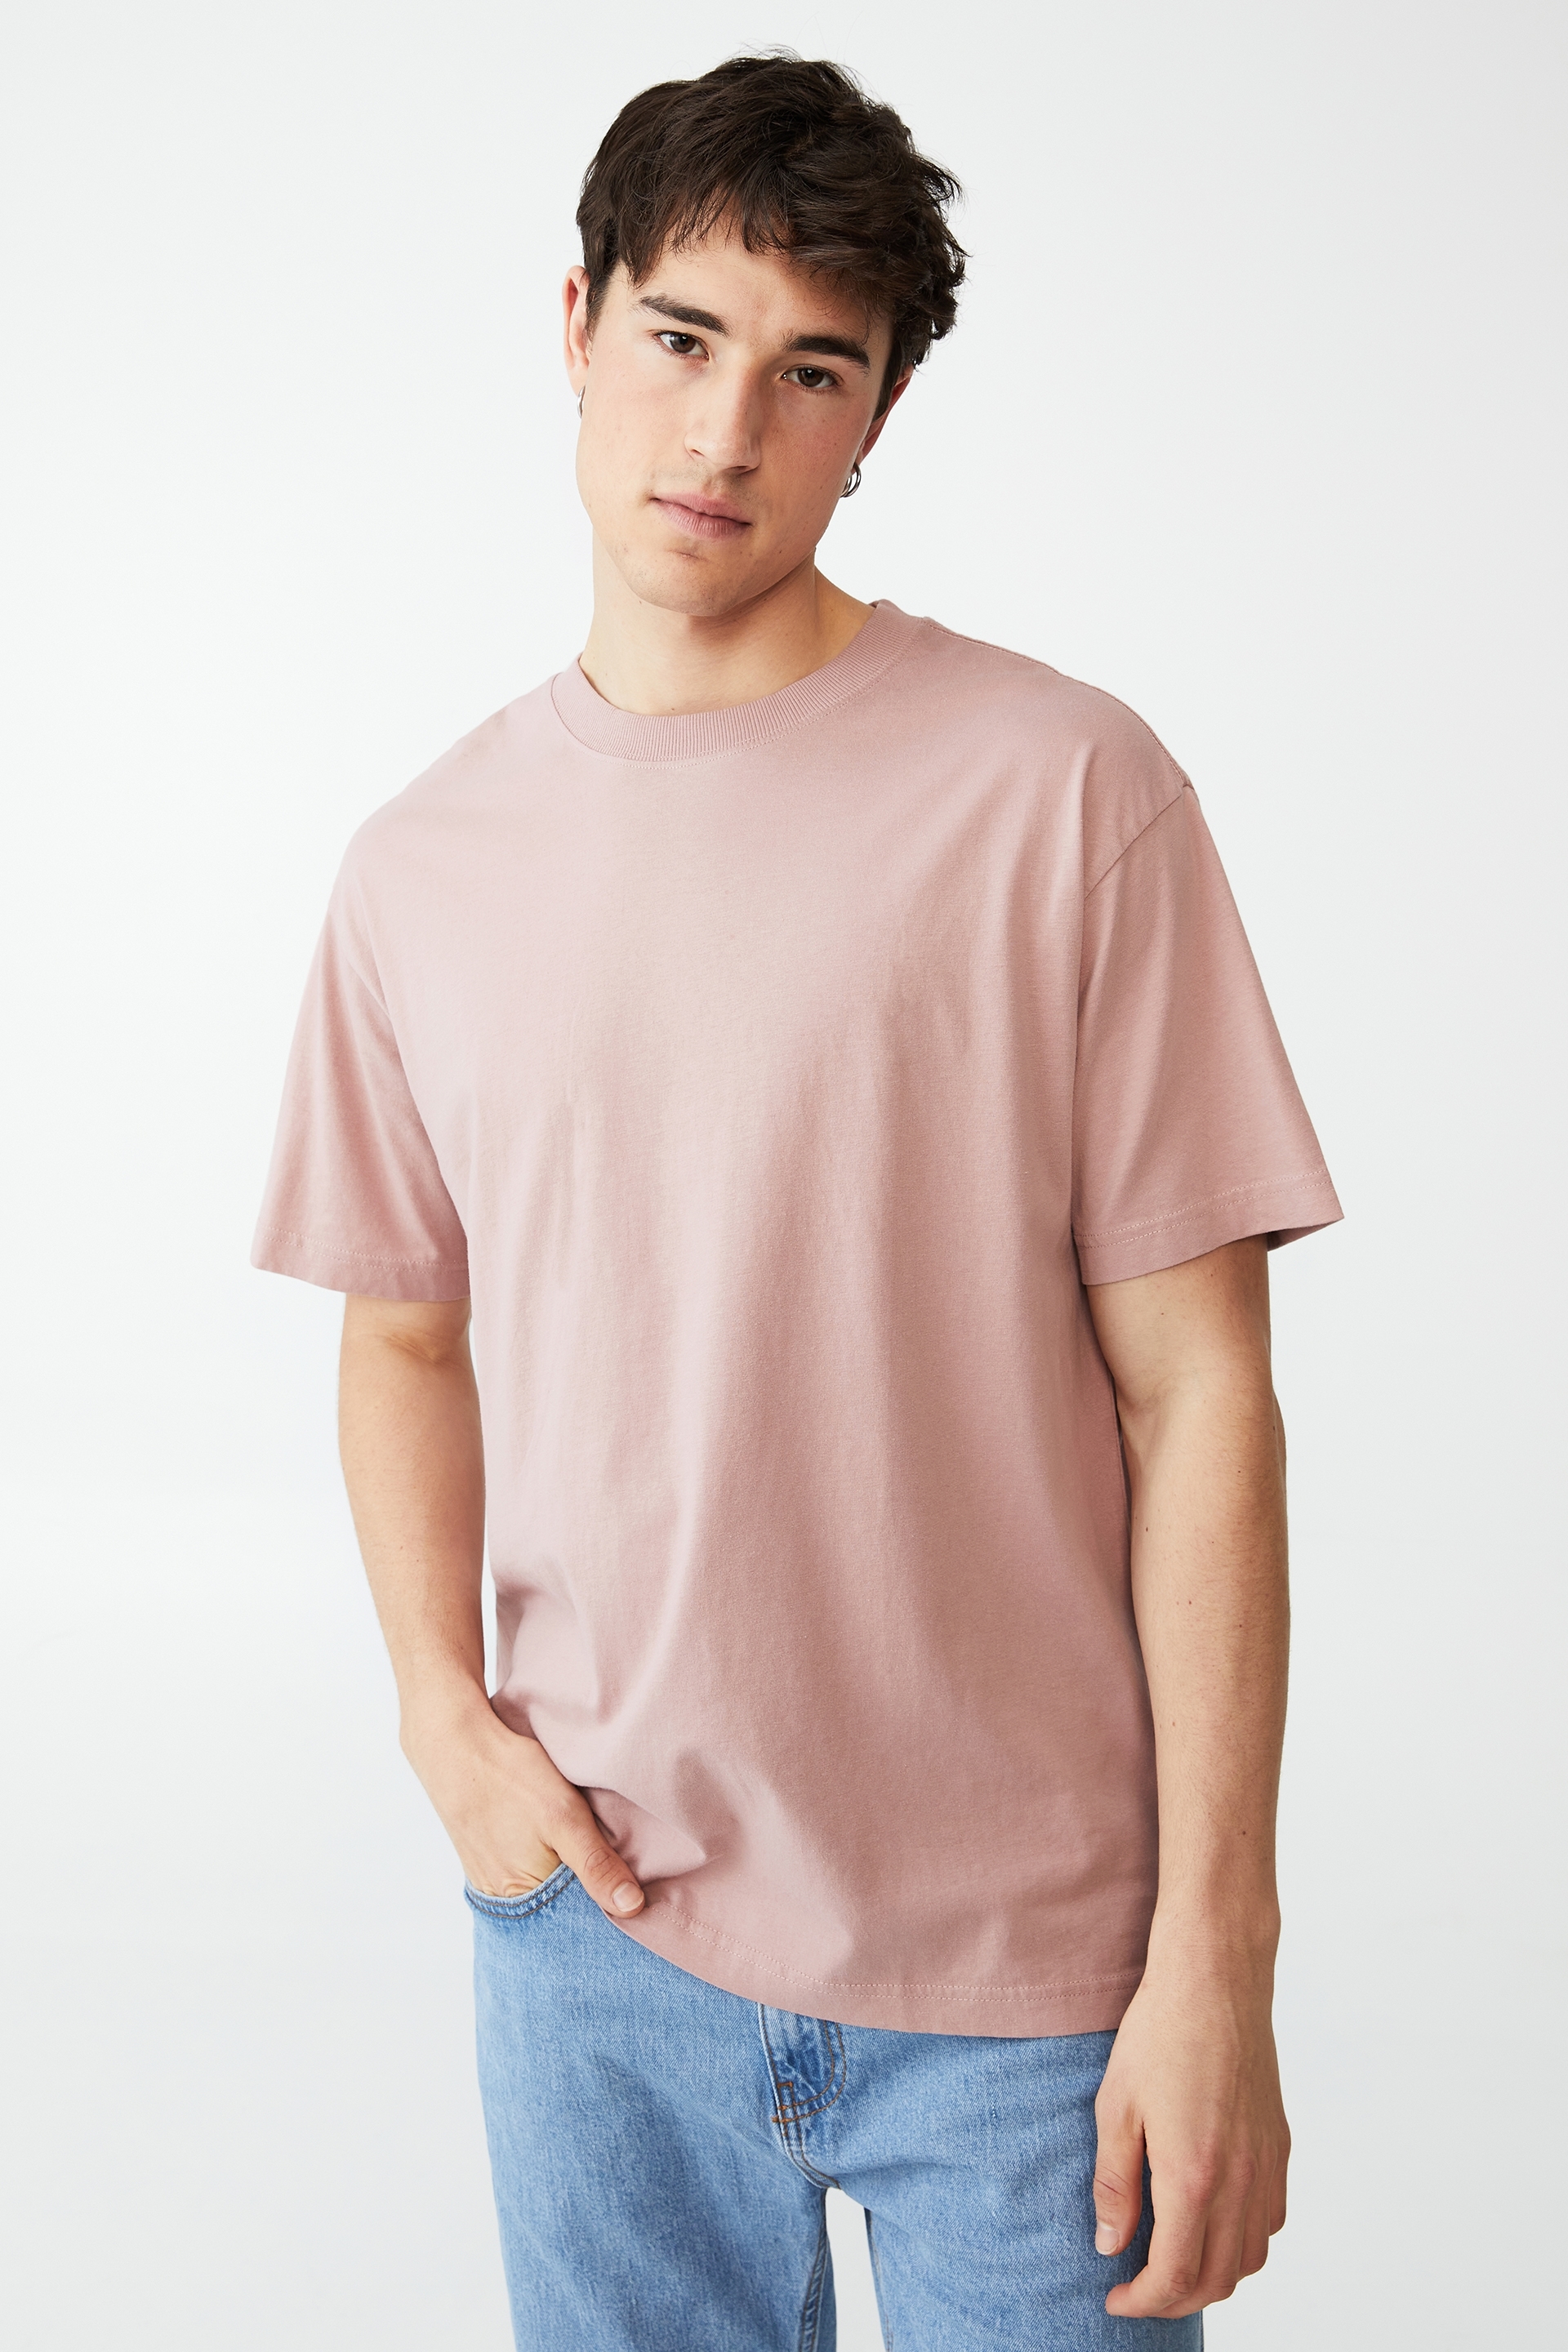 Cotton On Men - Organic Loose Fit T-Shirt - Plum